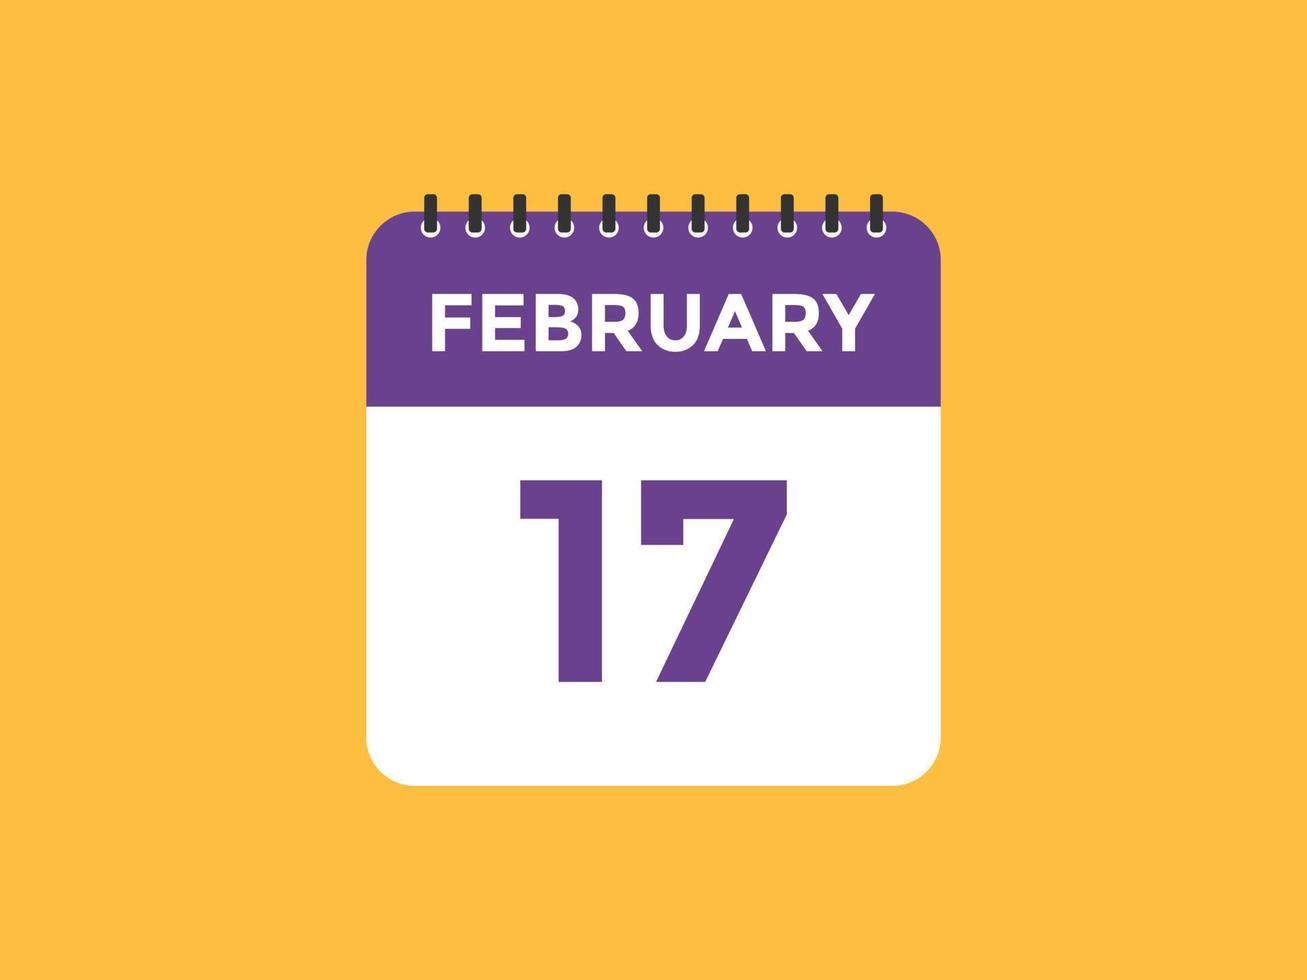 17. Februar Kalendererinnerung. 17. februar tägliche kalendersymbolvorlage. Kalender 17. Februar Icon-Design-Vorlage. Vektor-Illustration vektor